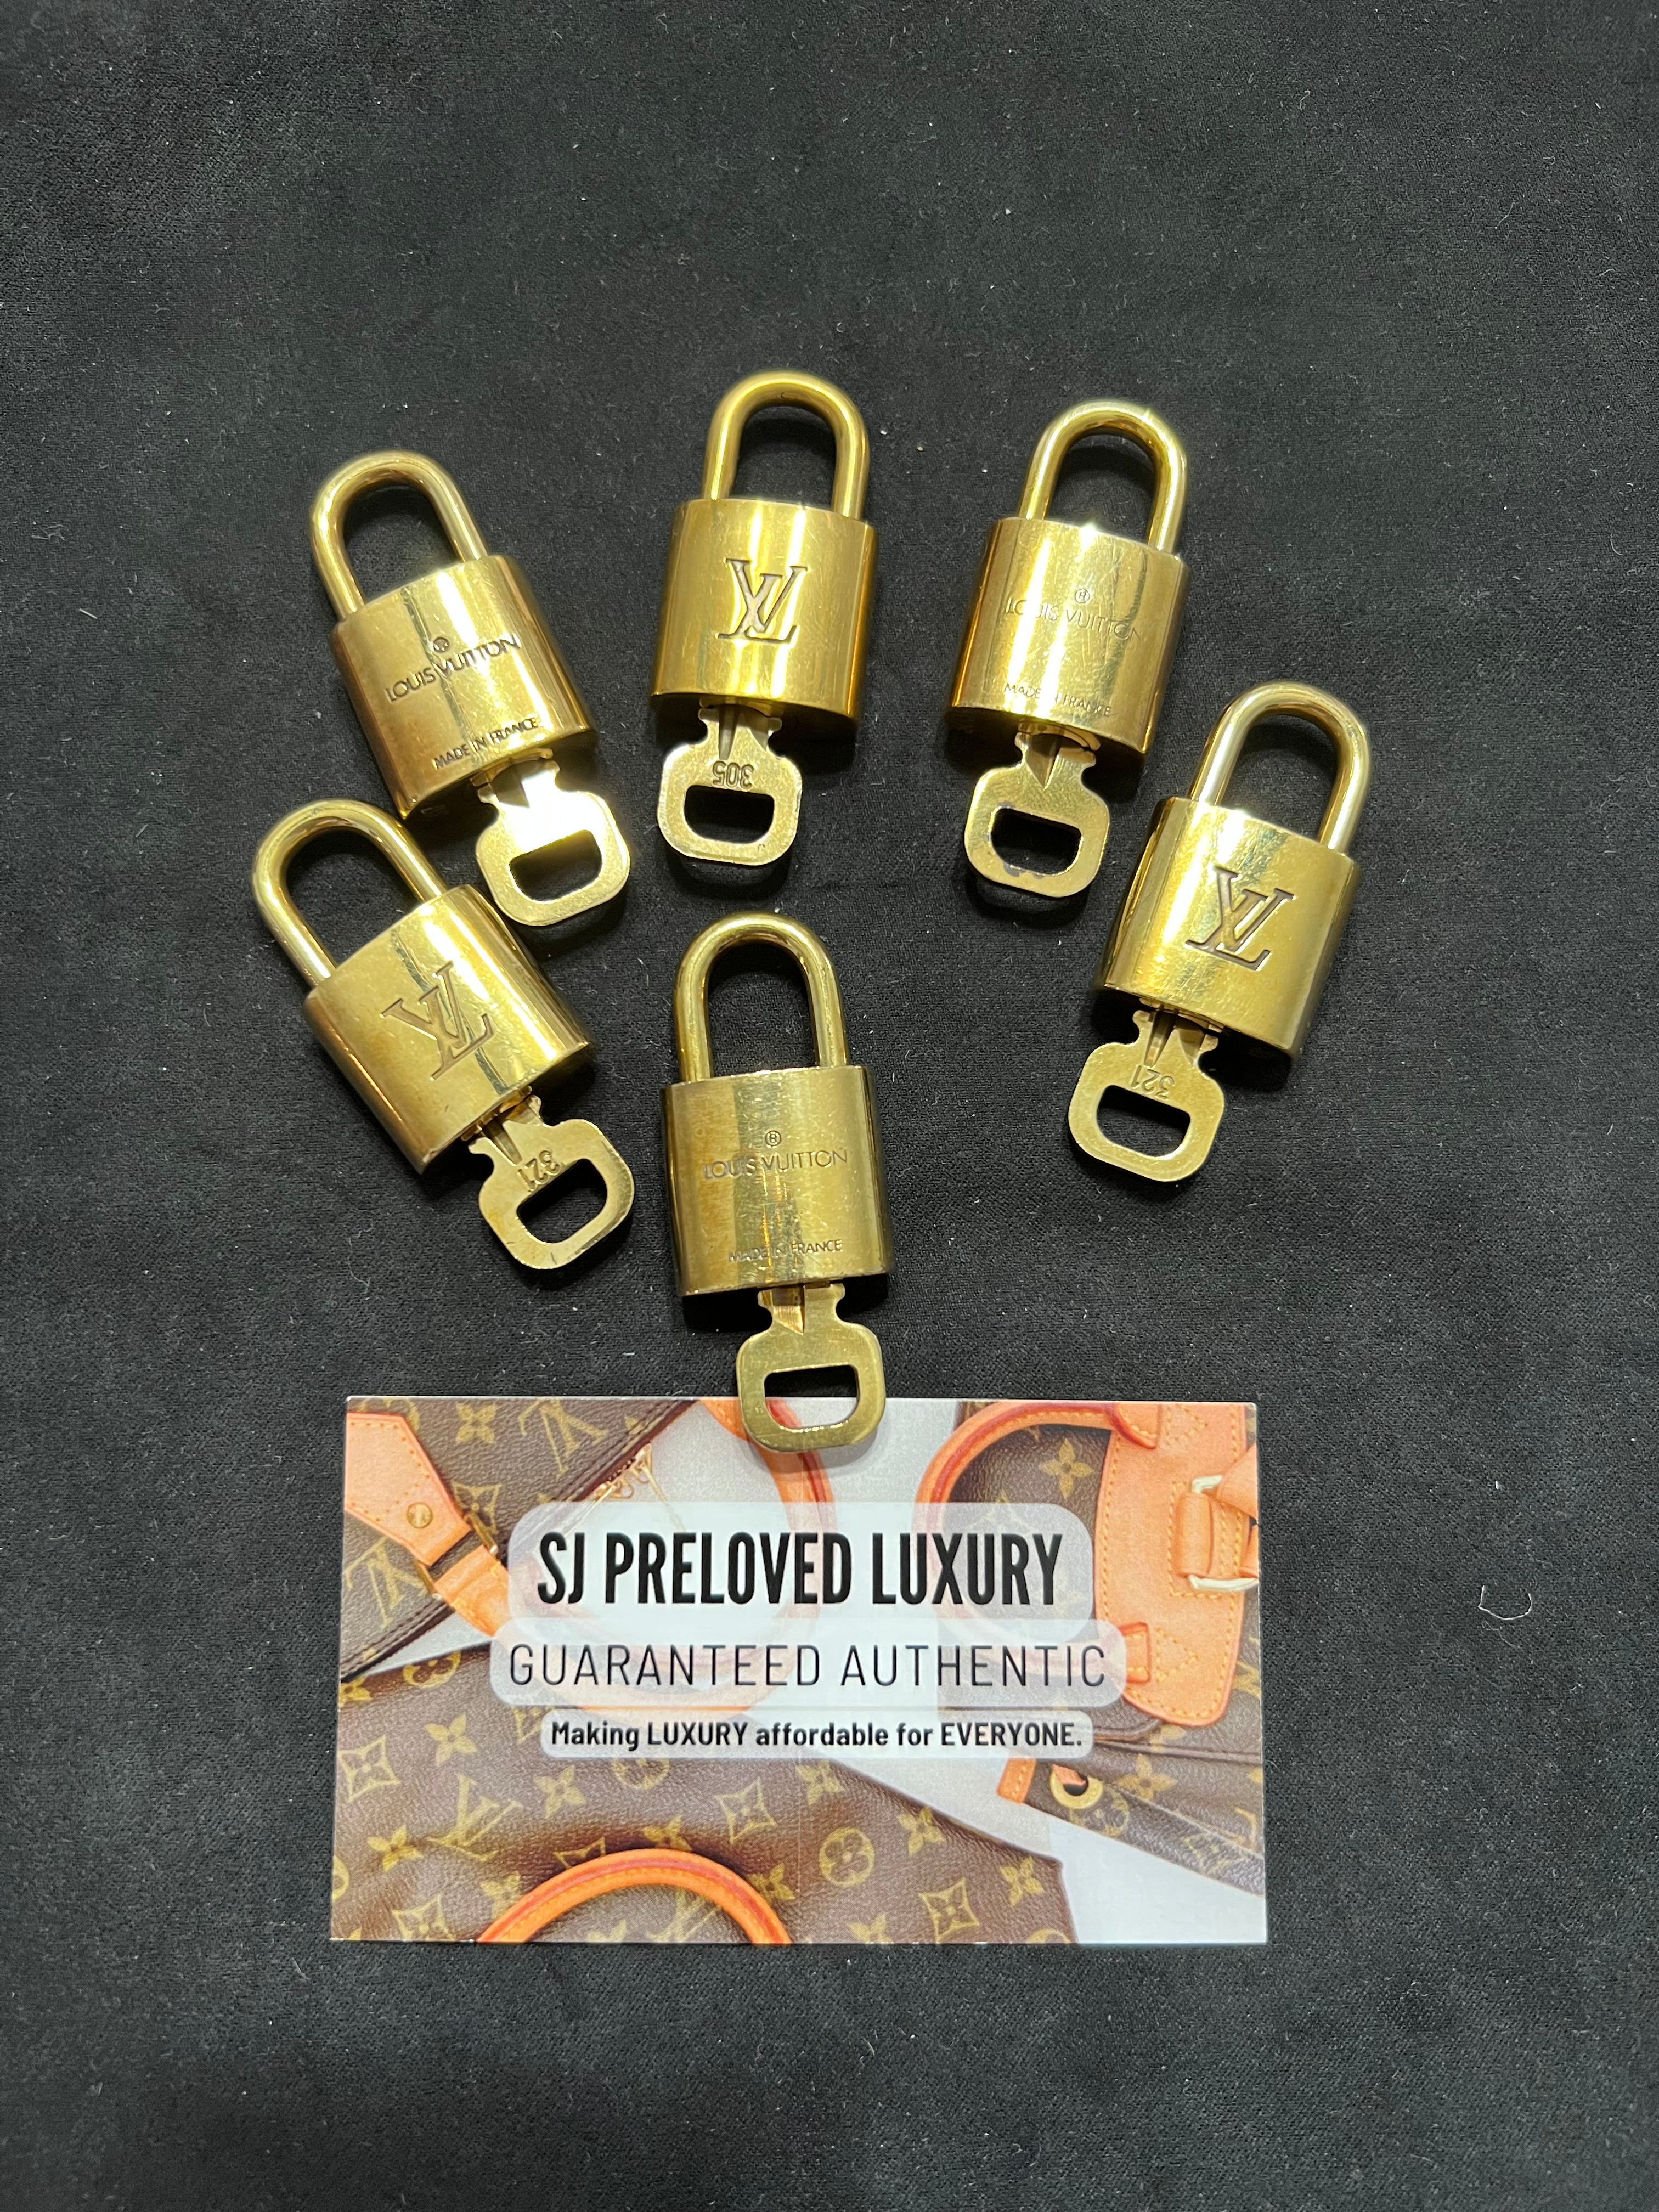 Authentic Lv Lock & Key #316 - Gem